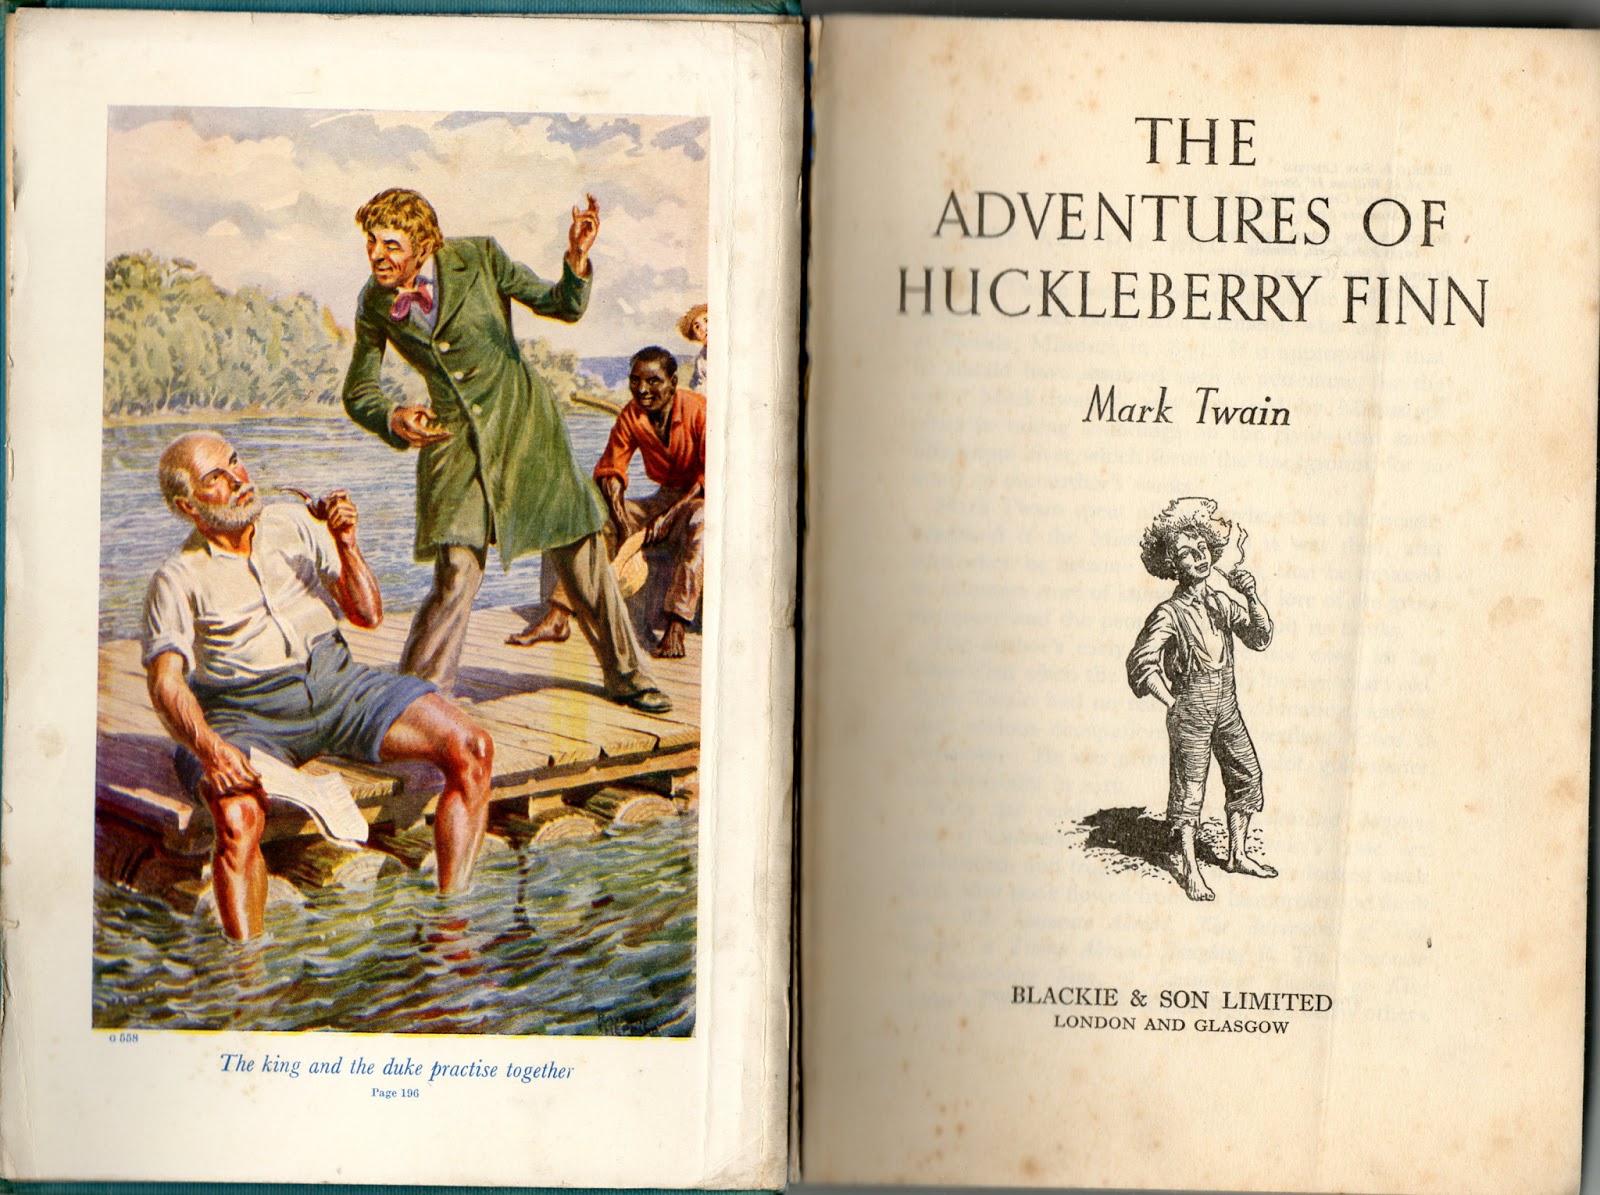 Mark twain wrote the adventures of huckleberry. Король и герцог из Гекльберри Финна. Гекльберри Финна обложка.